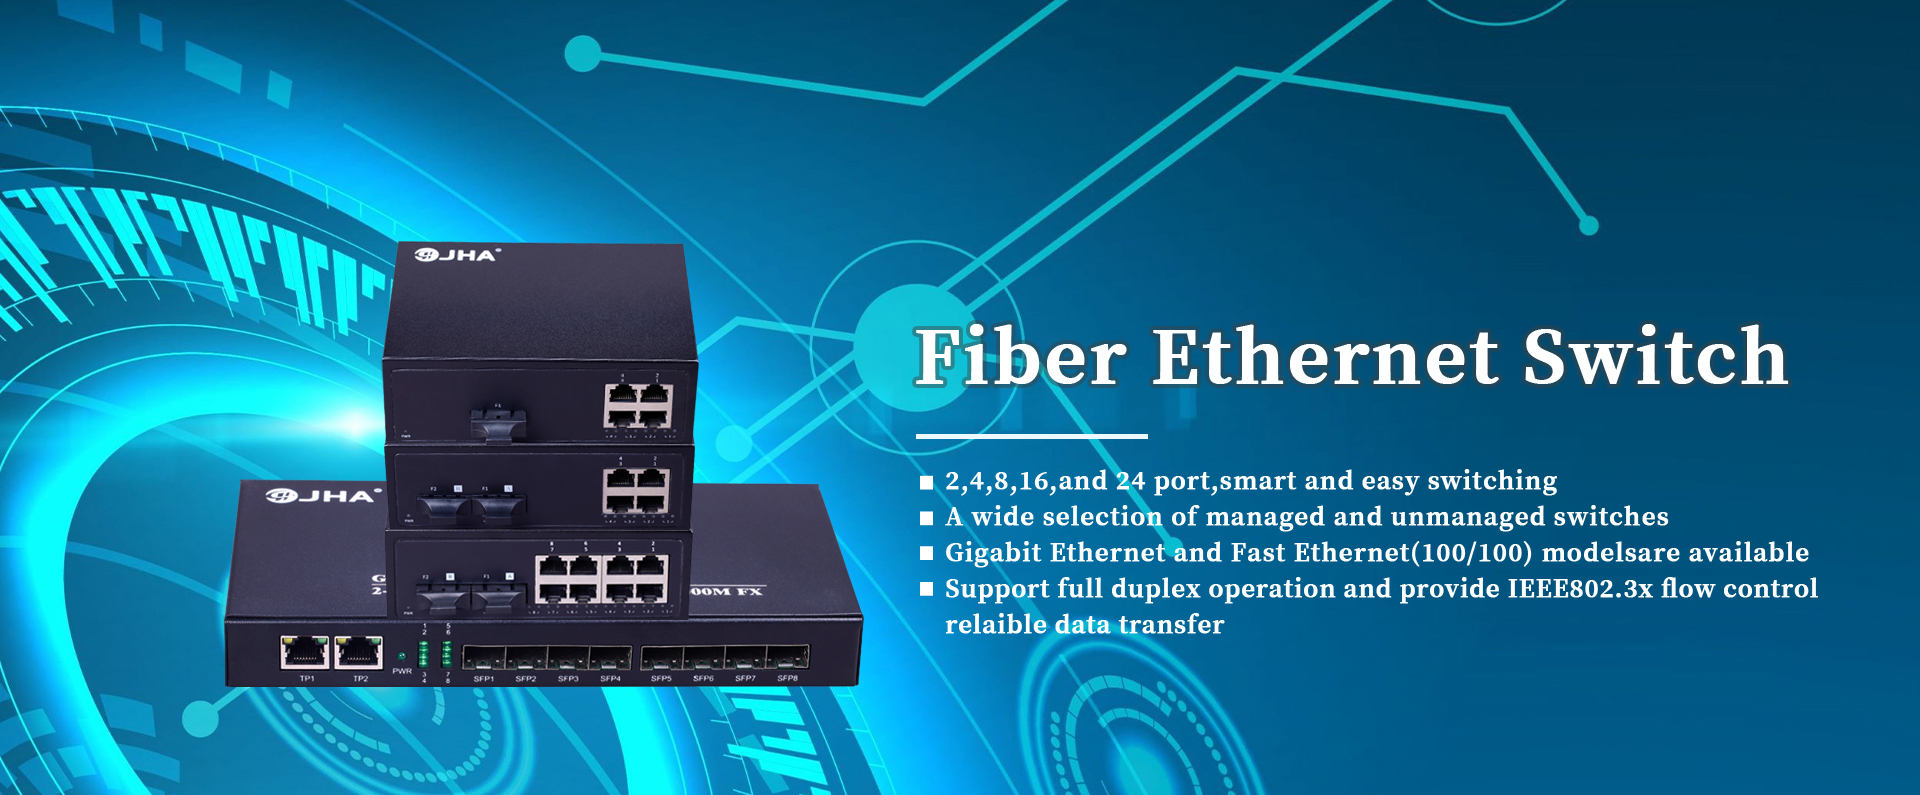 Suis Fthern Ethernet